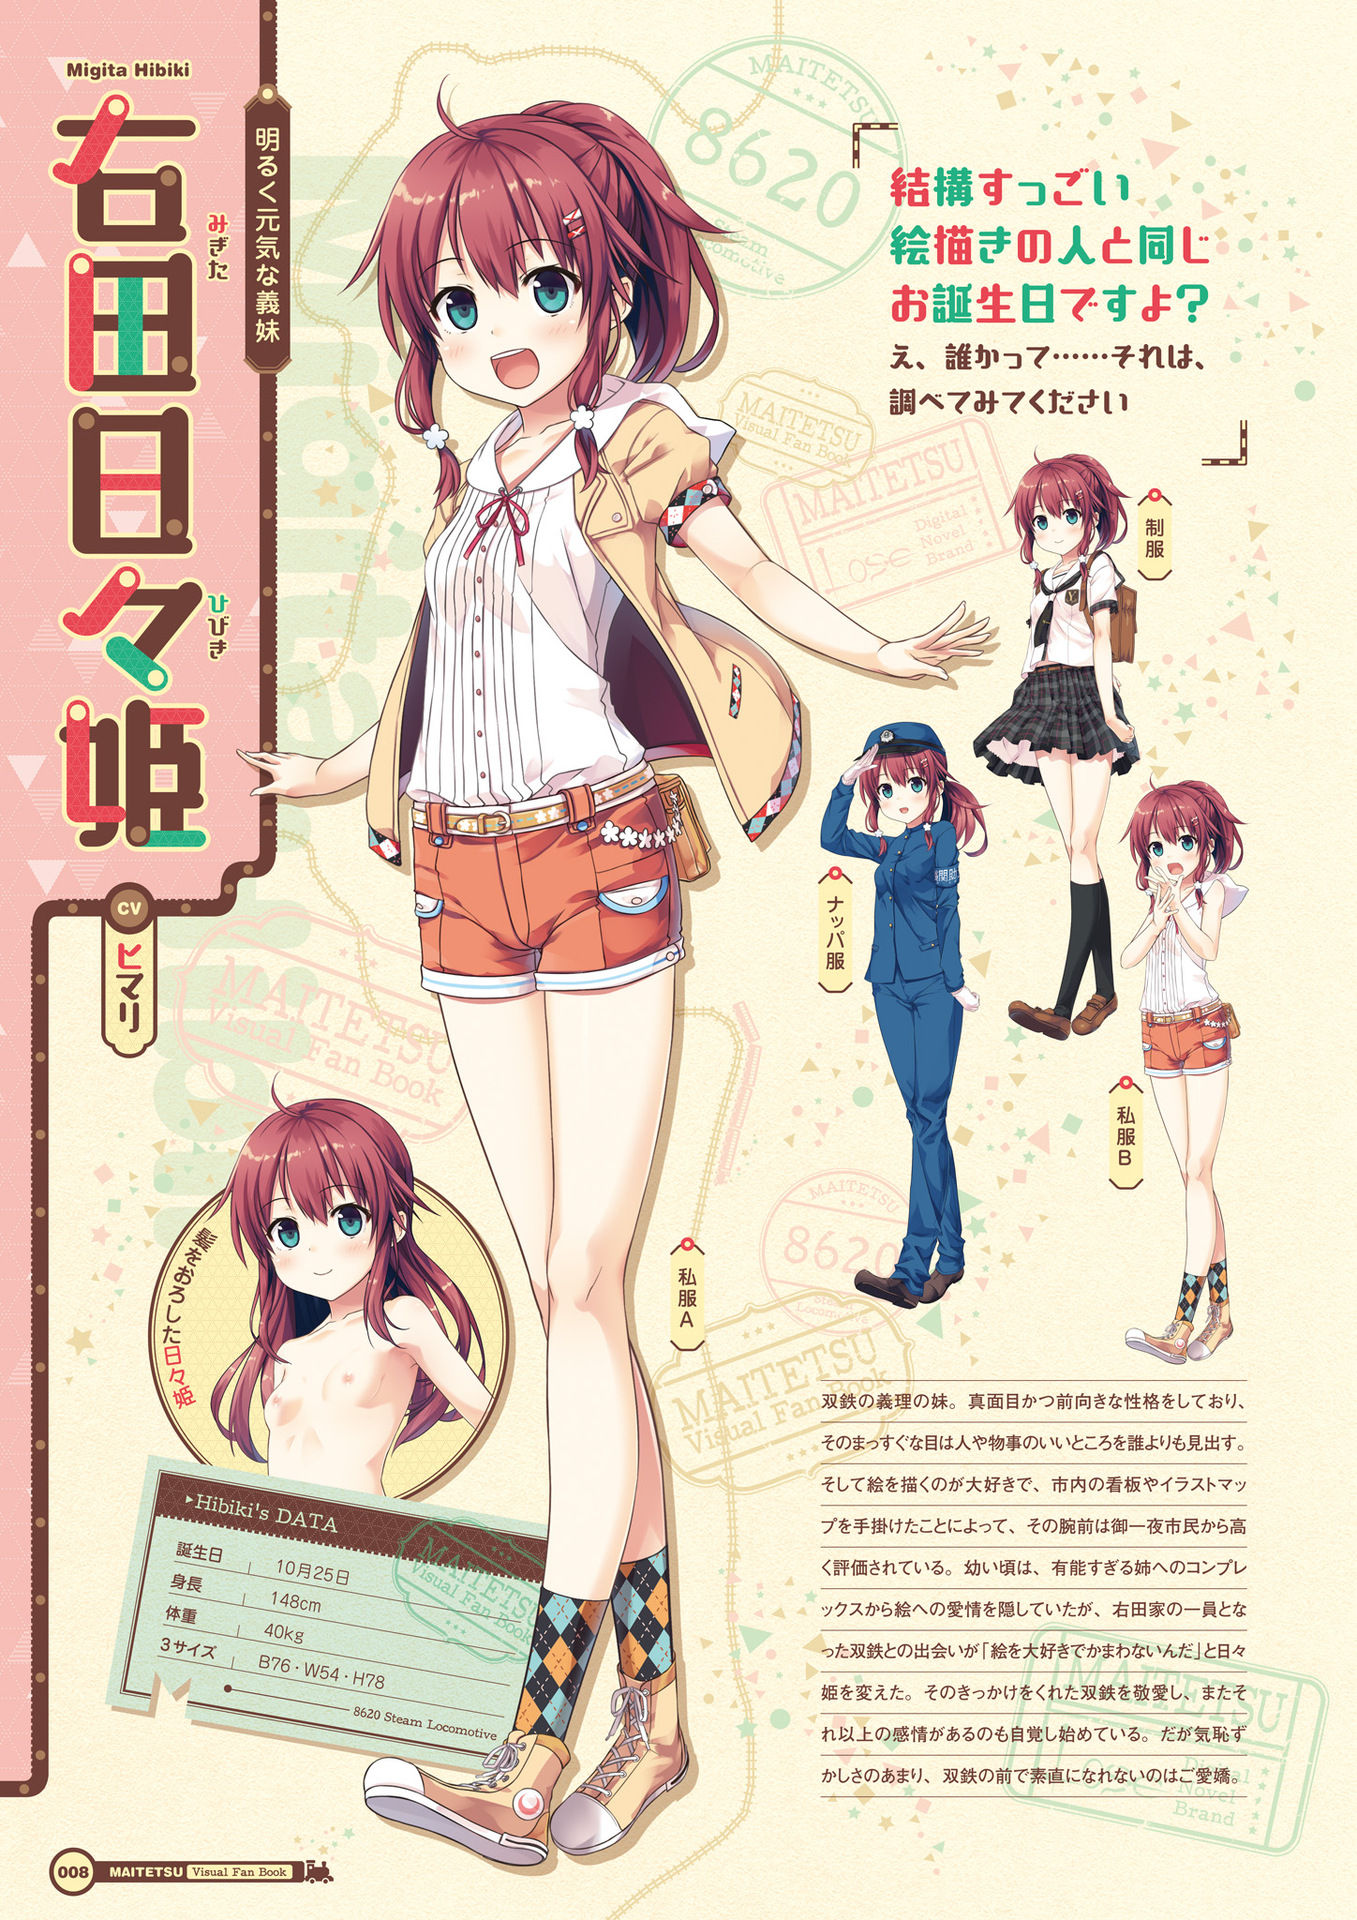 Lose Cura Maitetsu Migita Hibiki Character Design Digital Version Loli Naked Nipples Seifuku Uniform 3693 Yande Re